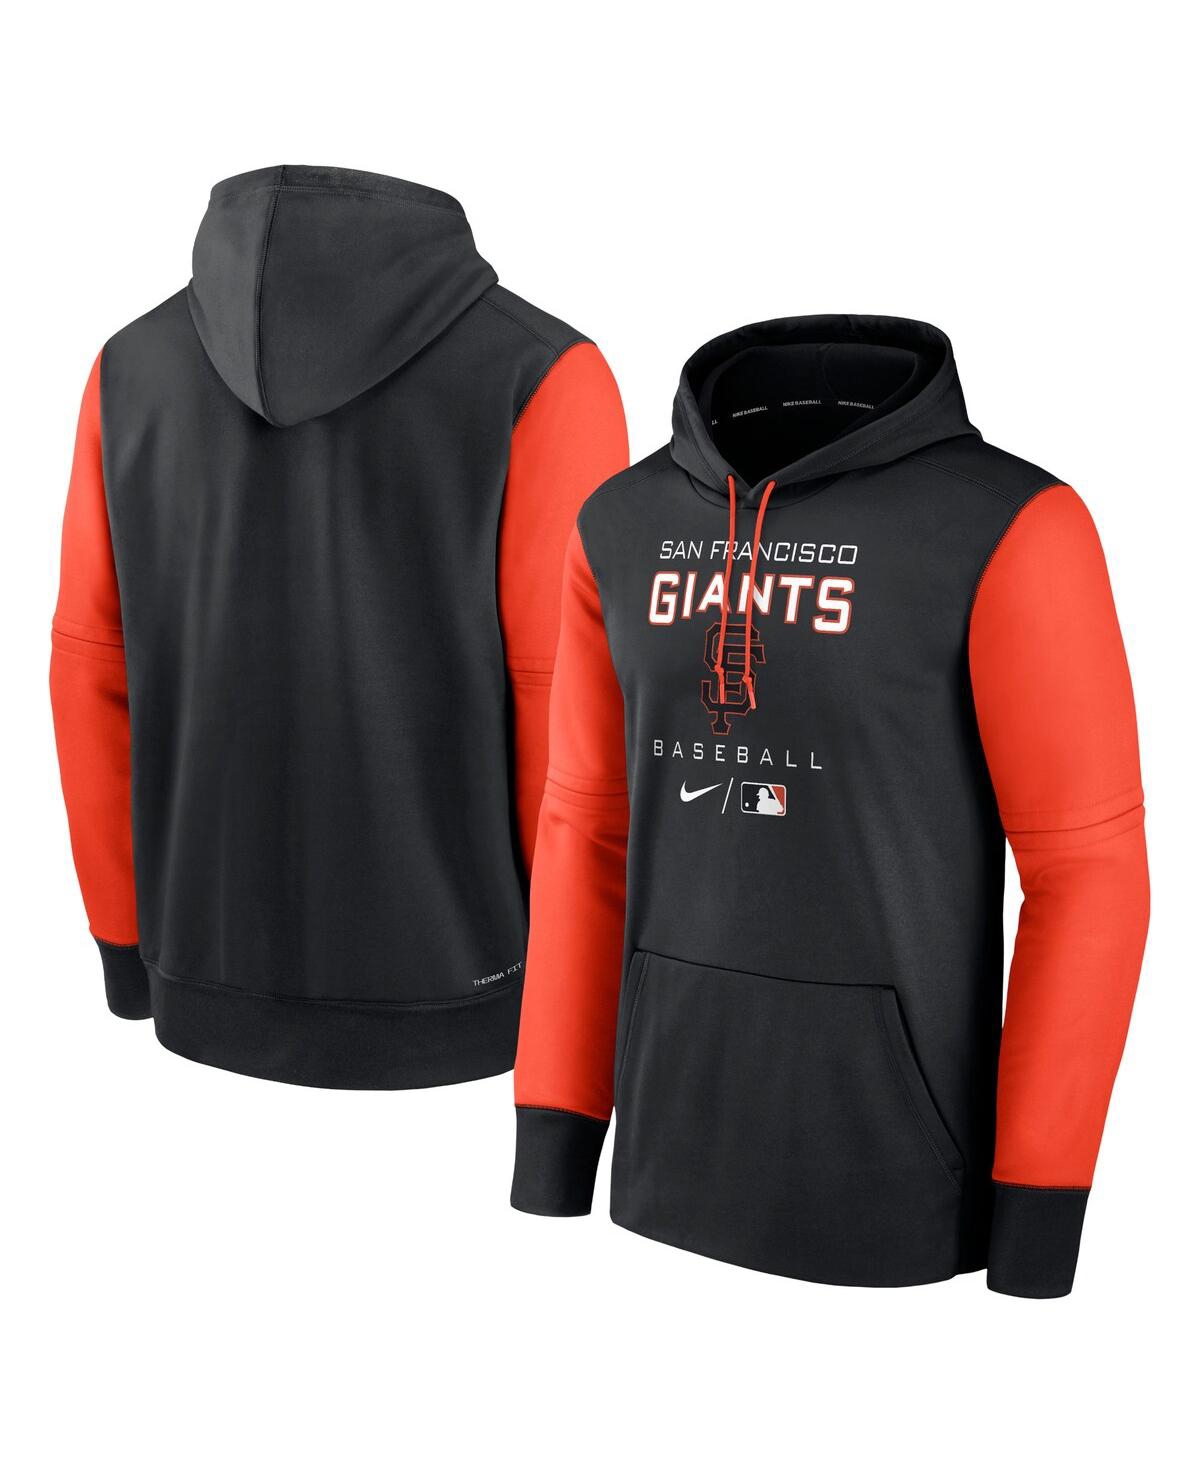 Men's Nike Black, Orange San Francisco Giants Authentic Collection Performance Hoodie